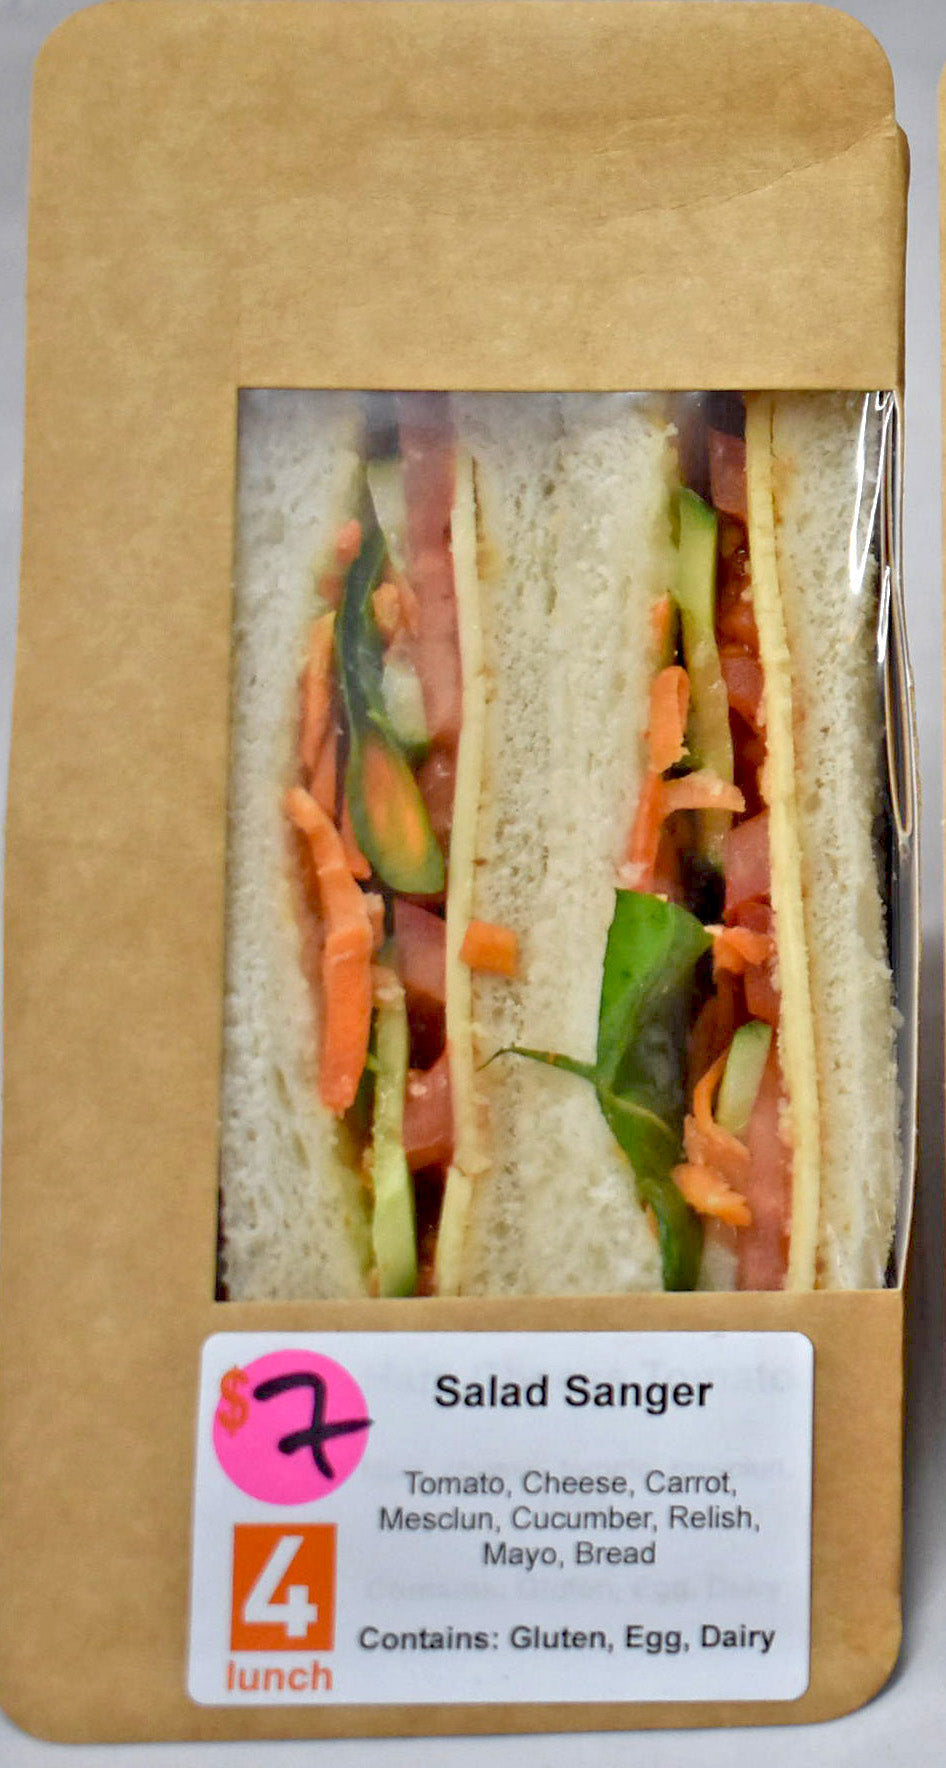 HDS Sandwich wedge - Salad